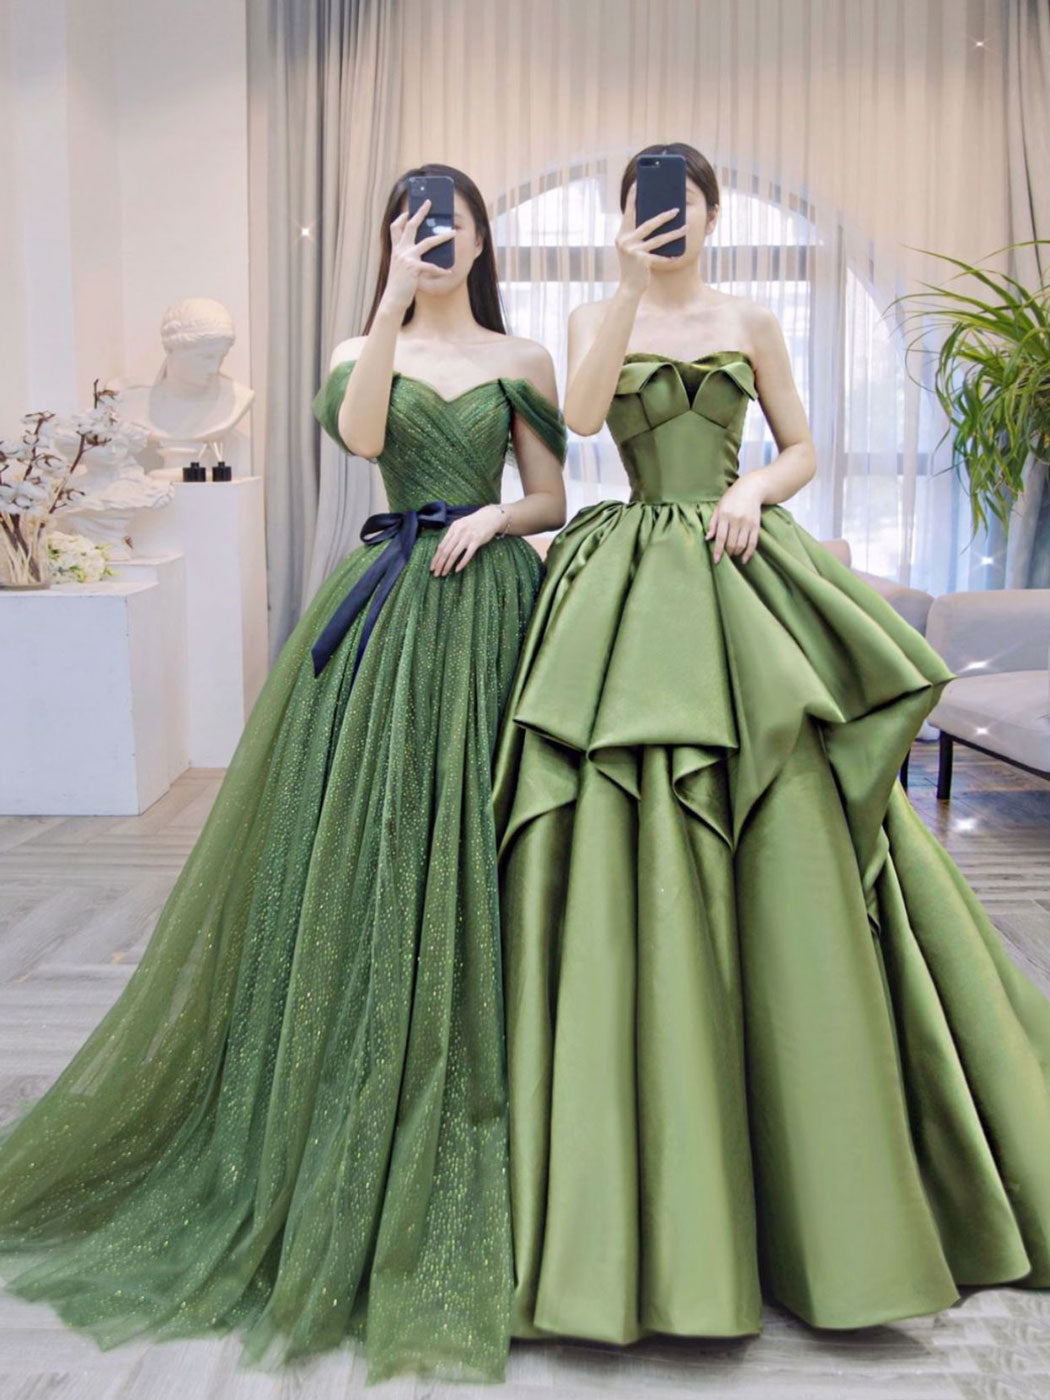 EVENING DRESS TELAVIV | Ricca Sposa bridal boutique